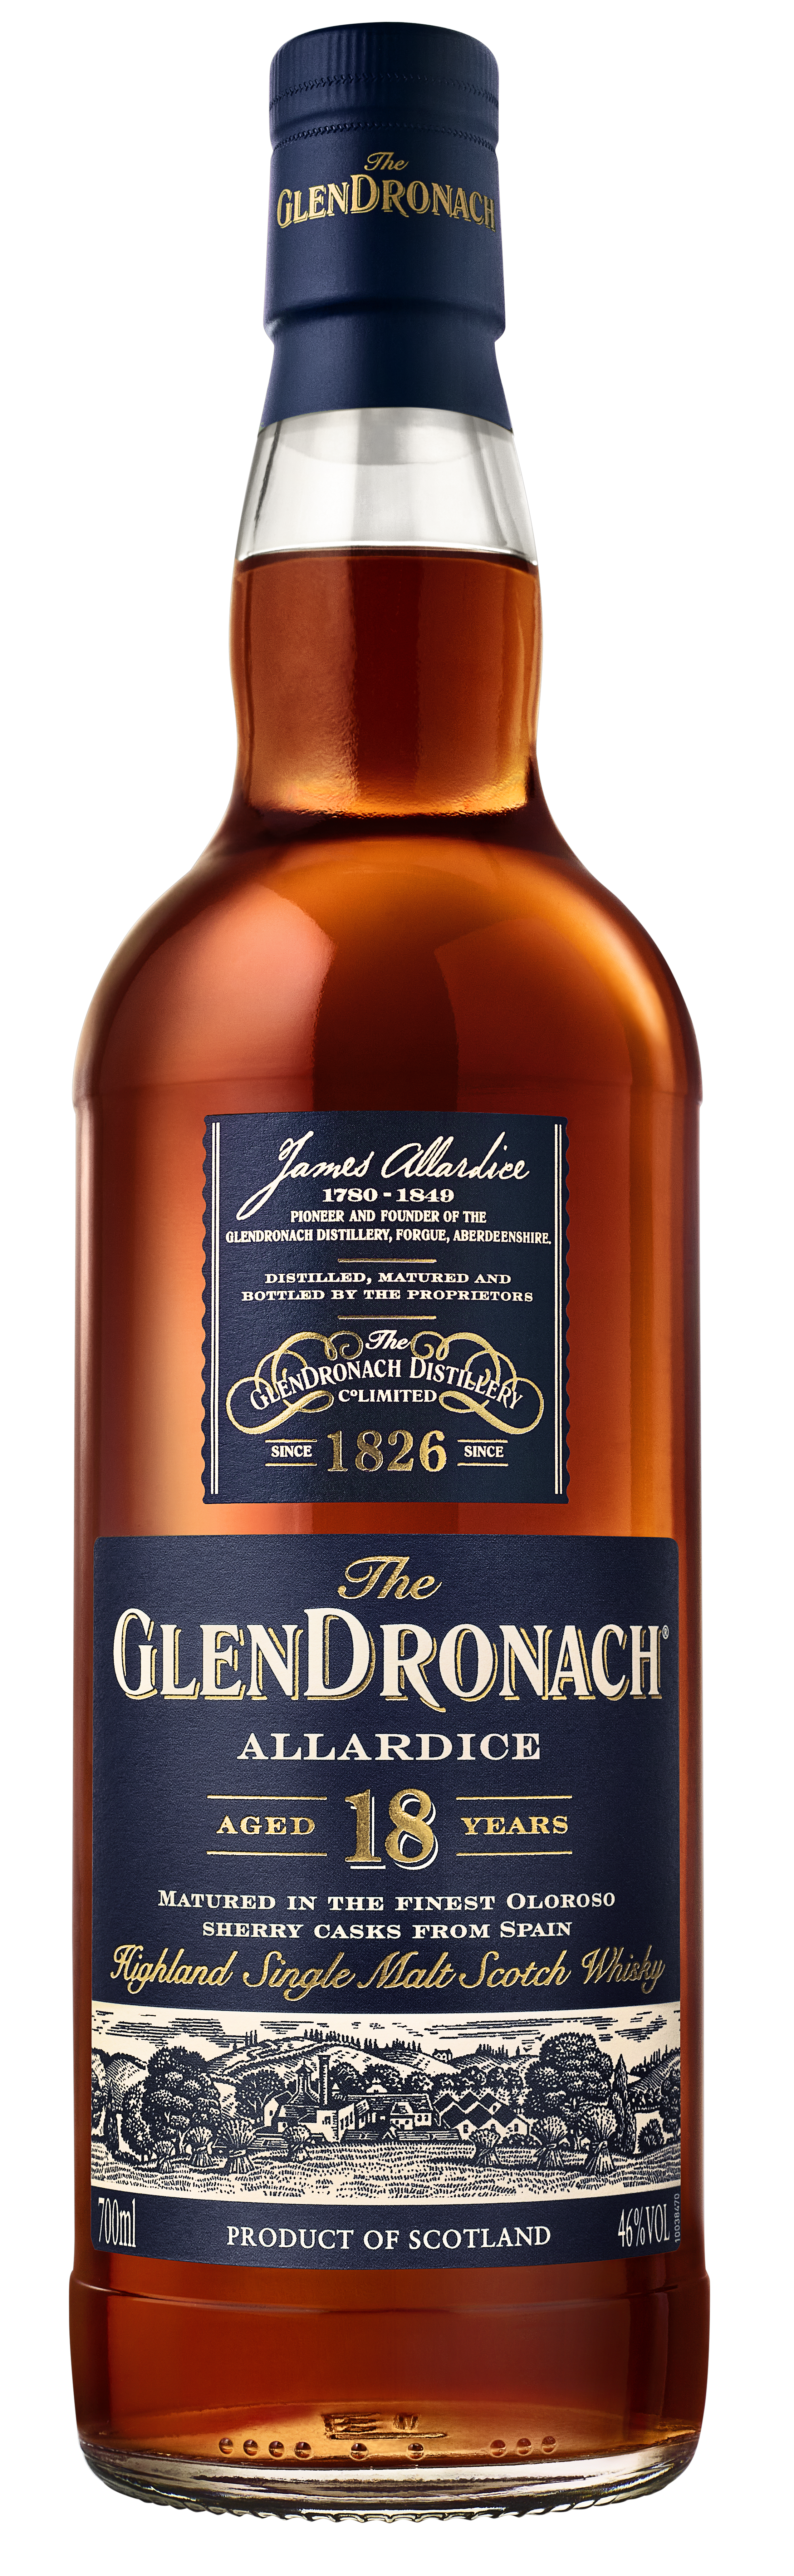 The GlenDronach Allardice bottle